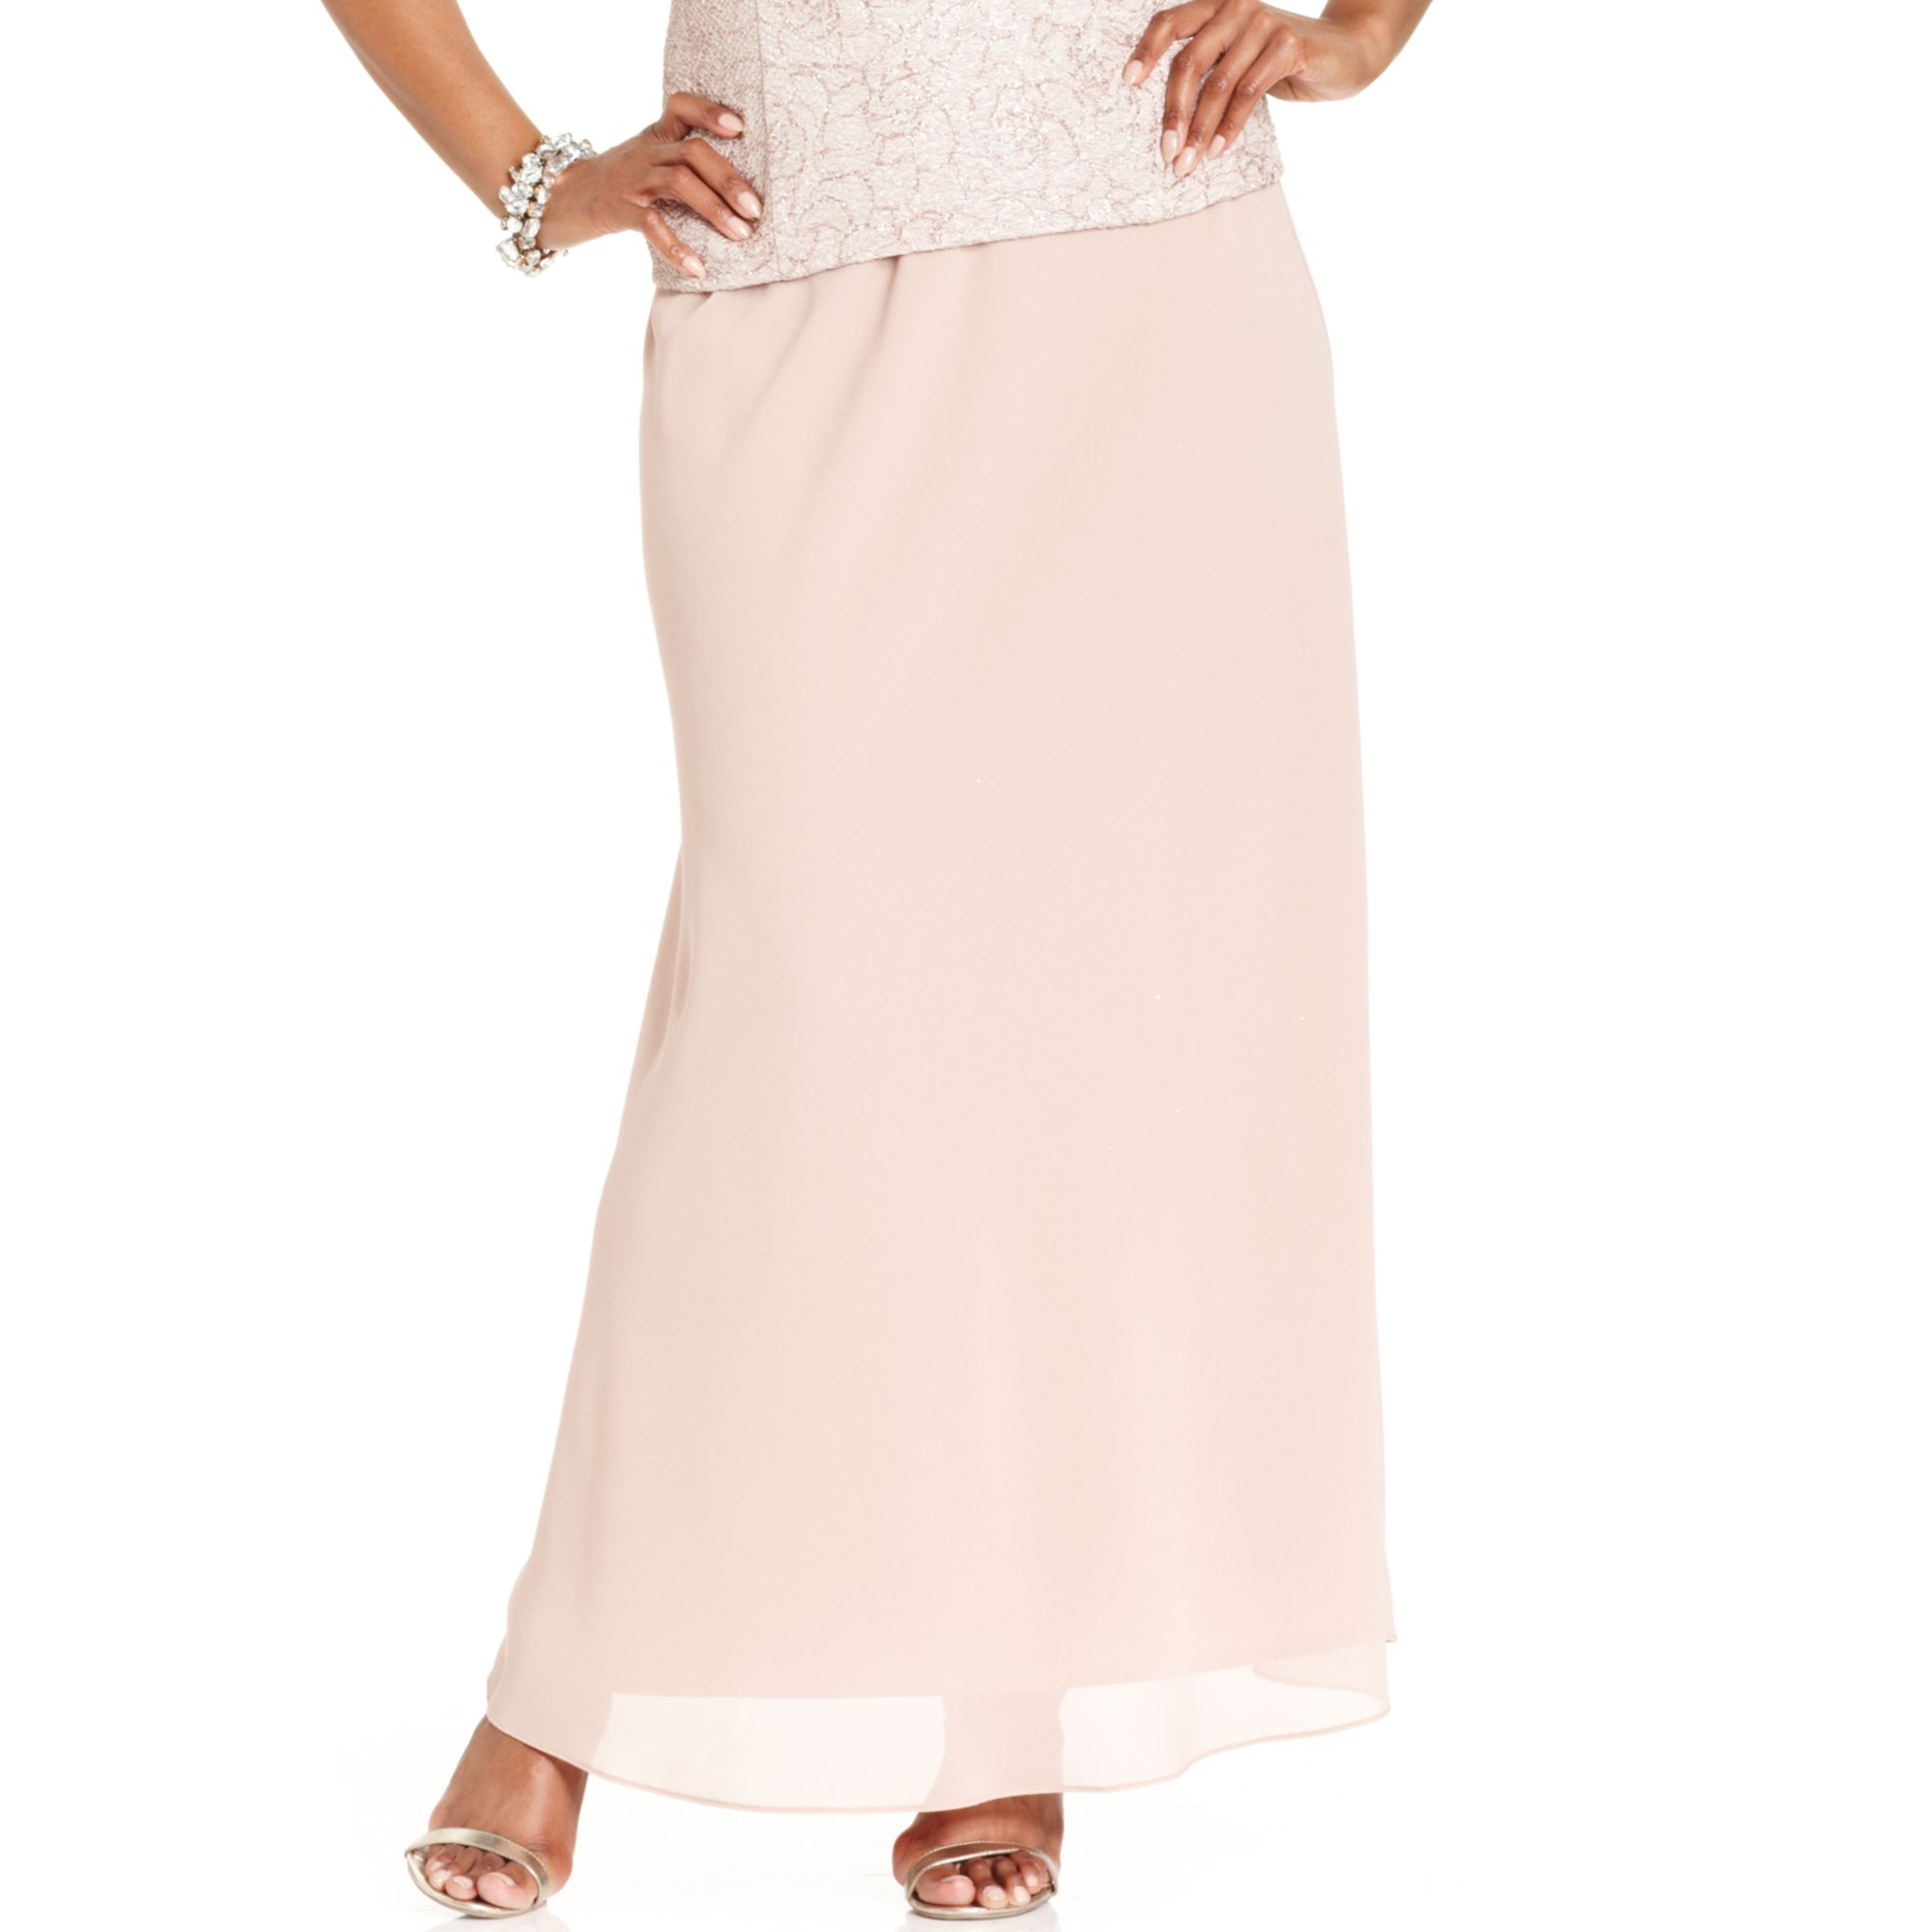 Alex Evenings rose goldtaupe dress  size 12 fits like size 14  Womens   Dresses  Skirts  Kitchener  Waterloo  Kijiji